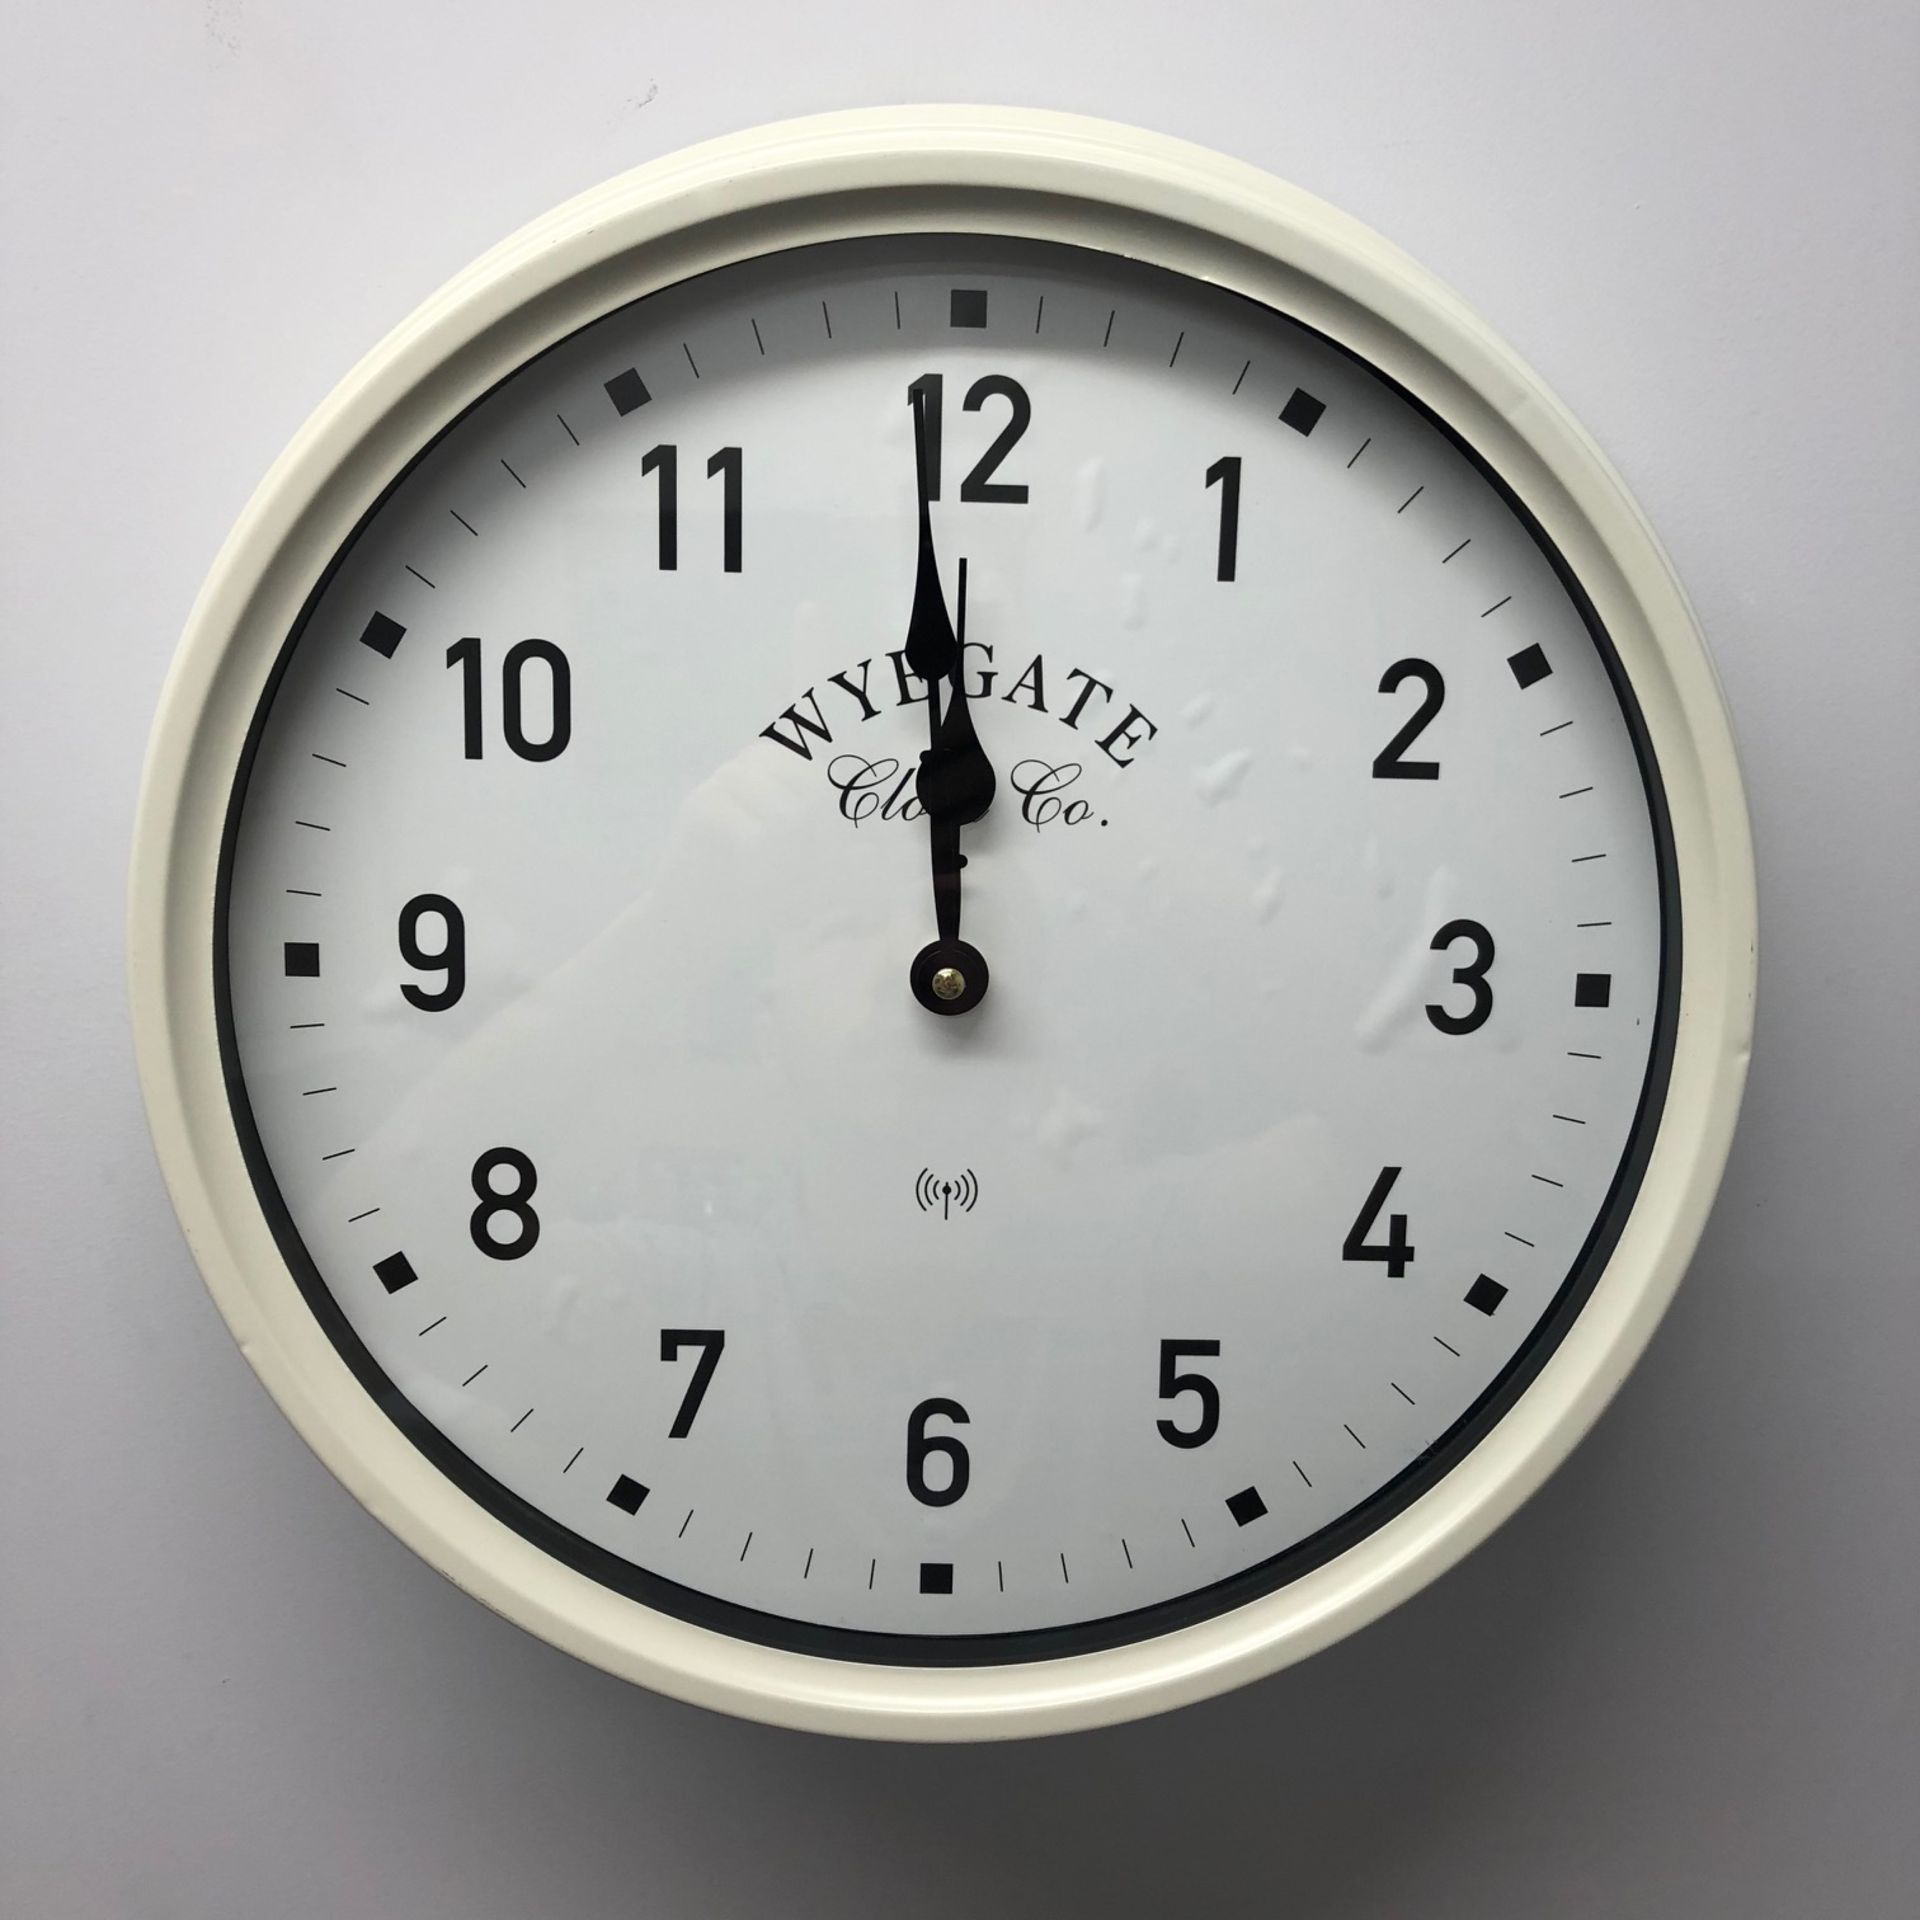 V Brand New Big Wyegate Garden/Indoor Clock (Radio Controlled) - 39cm - Cream - RRP £24.99 - - Image 2 of 2